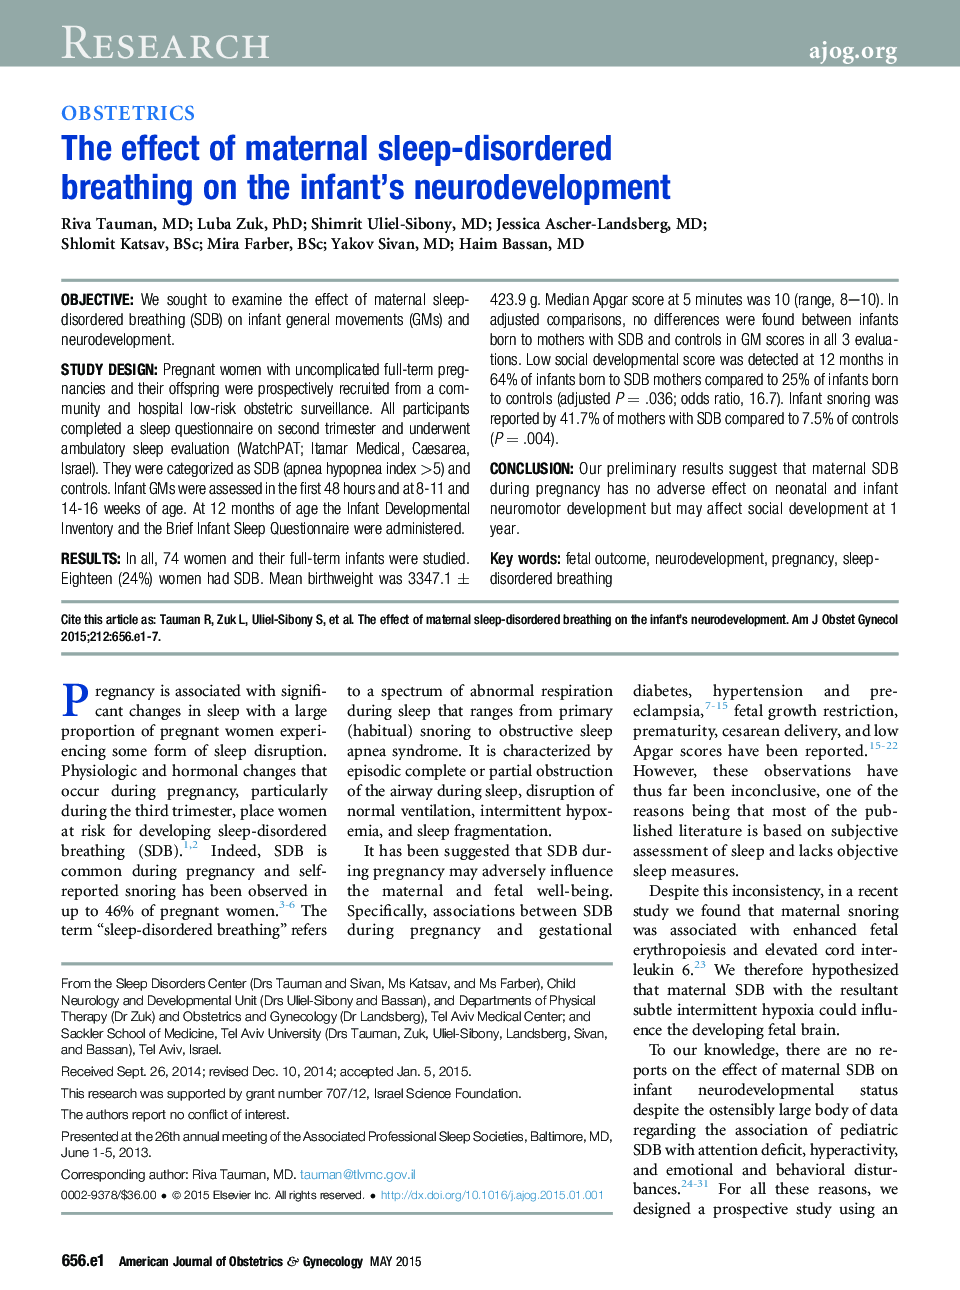 The effect of maternal sleep-disordered breathing on the infant's neurodevelopment